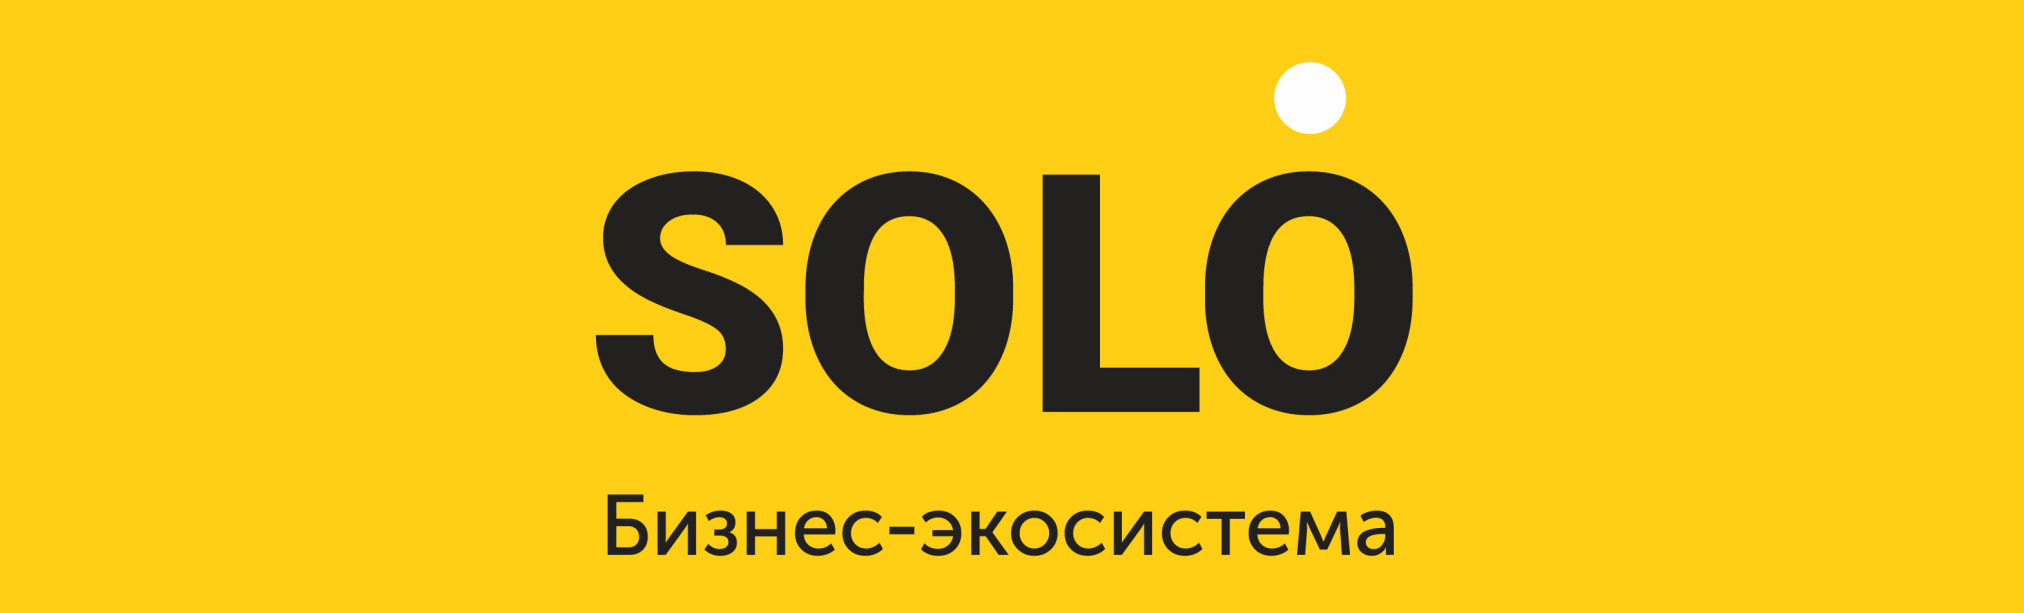 Solo_logo.jpg